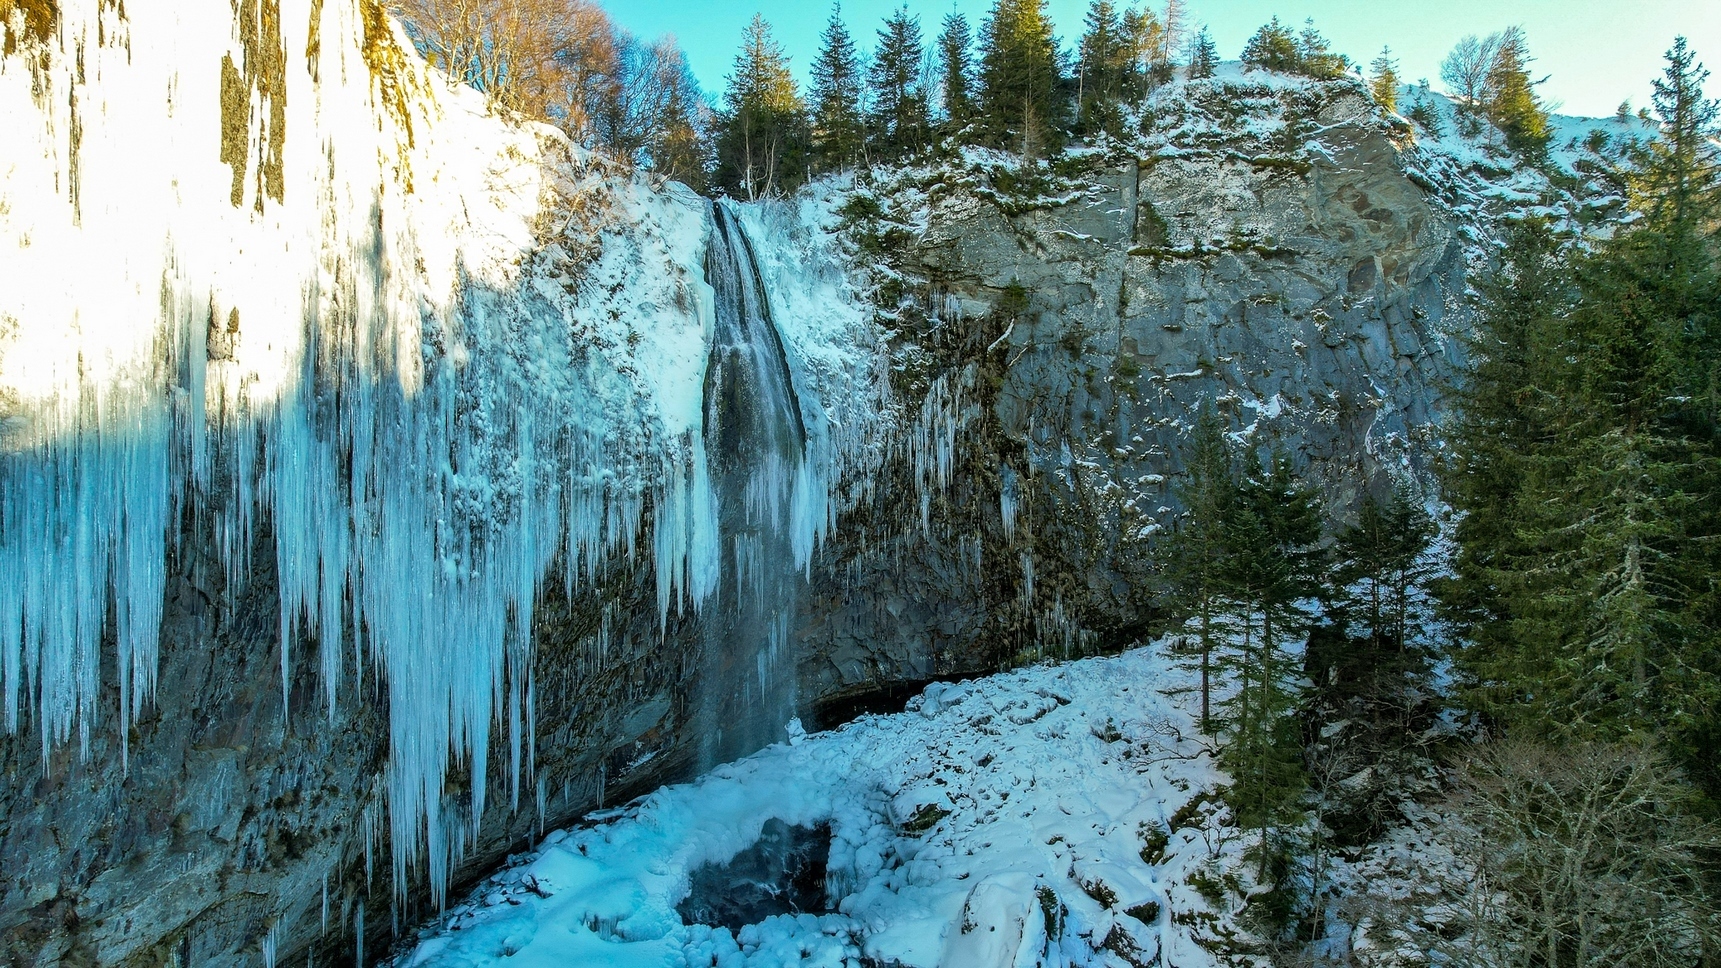 The Grande Cascade, Mont Dore waterfall